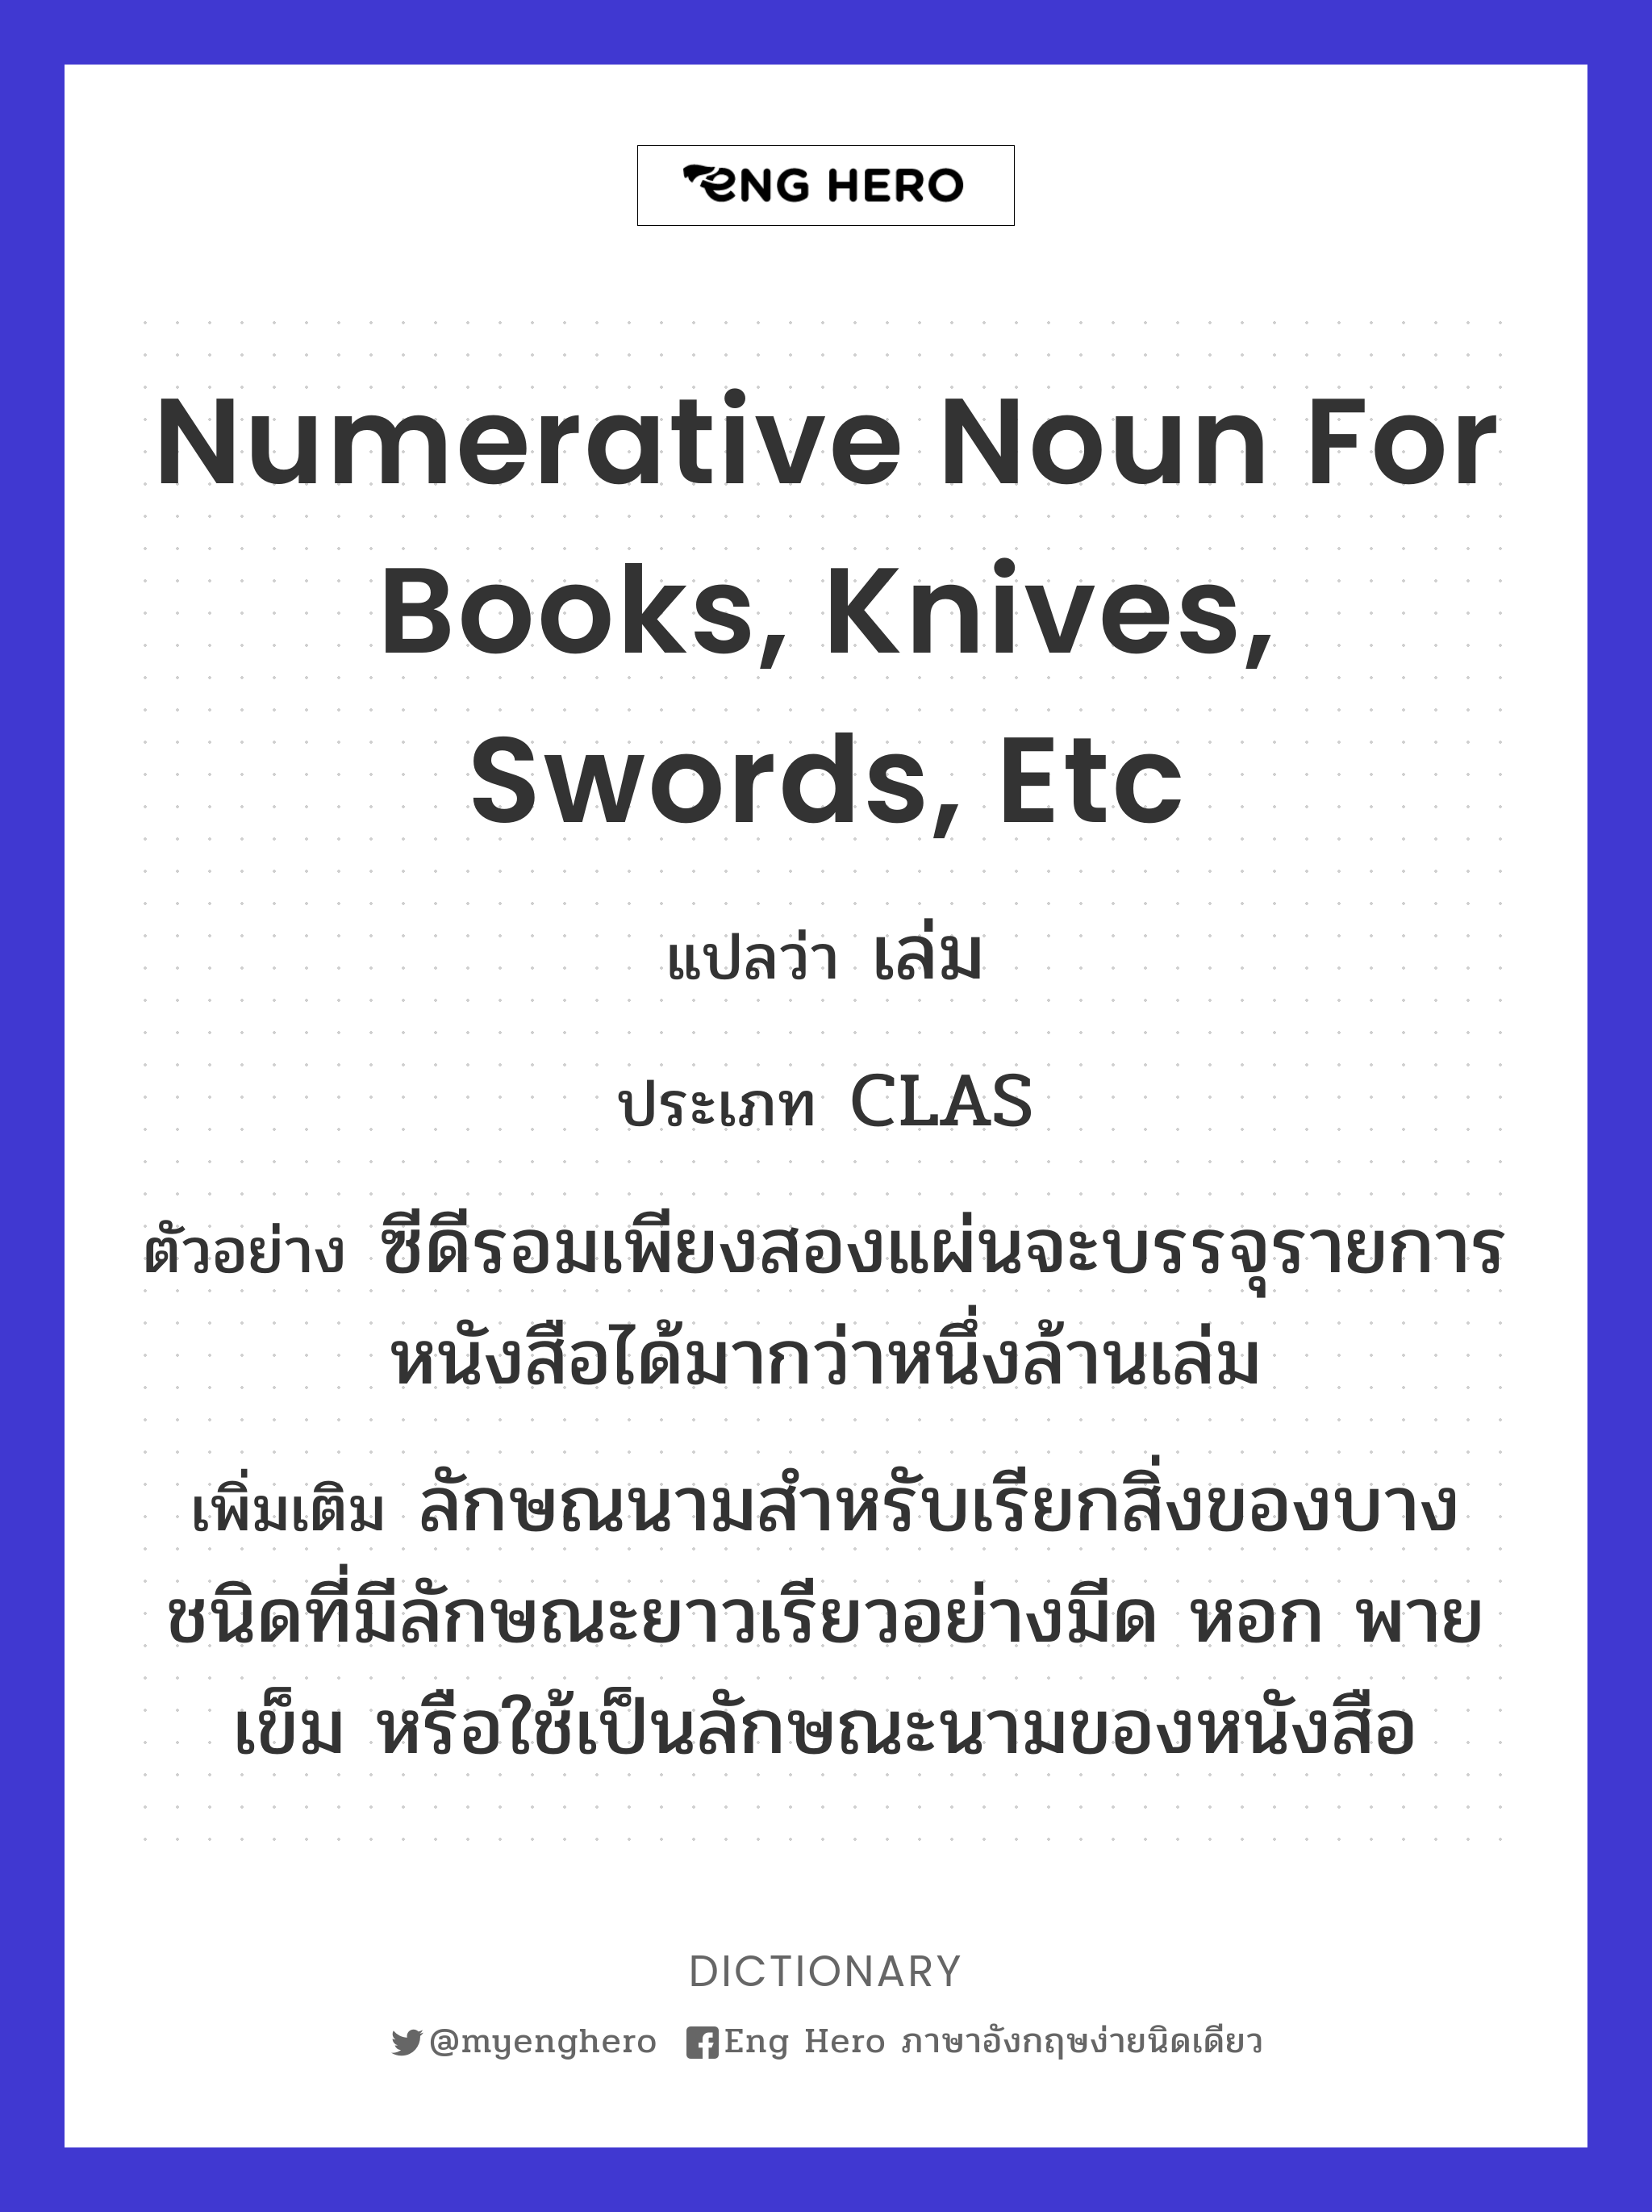 numerative noun for books, knives, swords, etc